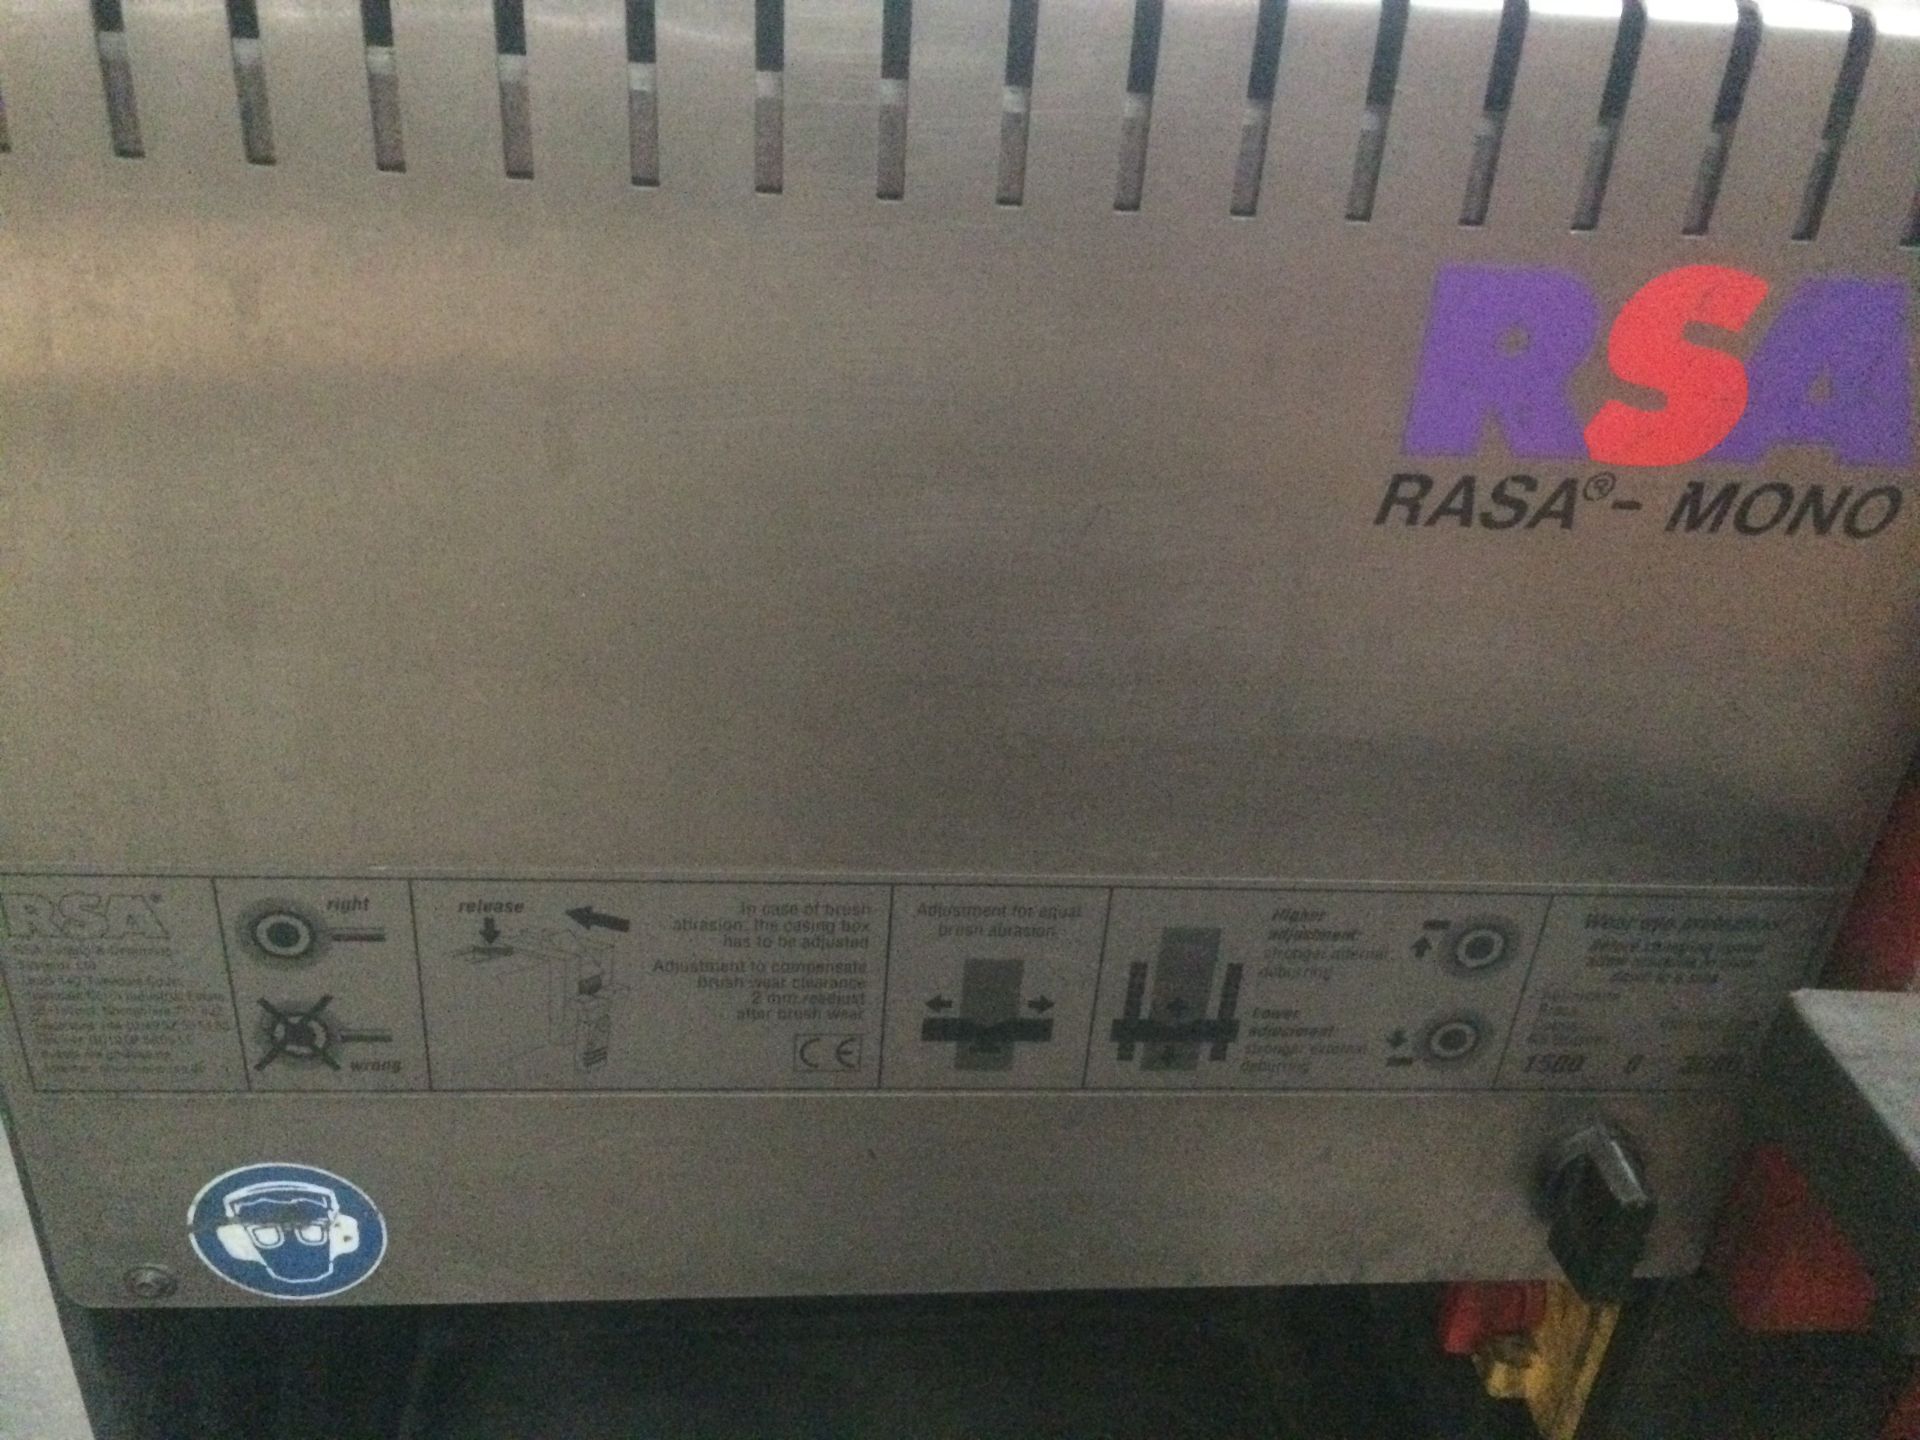 RSA (RASA MONO - Deburring Machine) with additional new wire wheel - Image 4 of 5